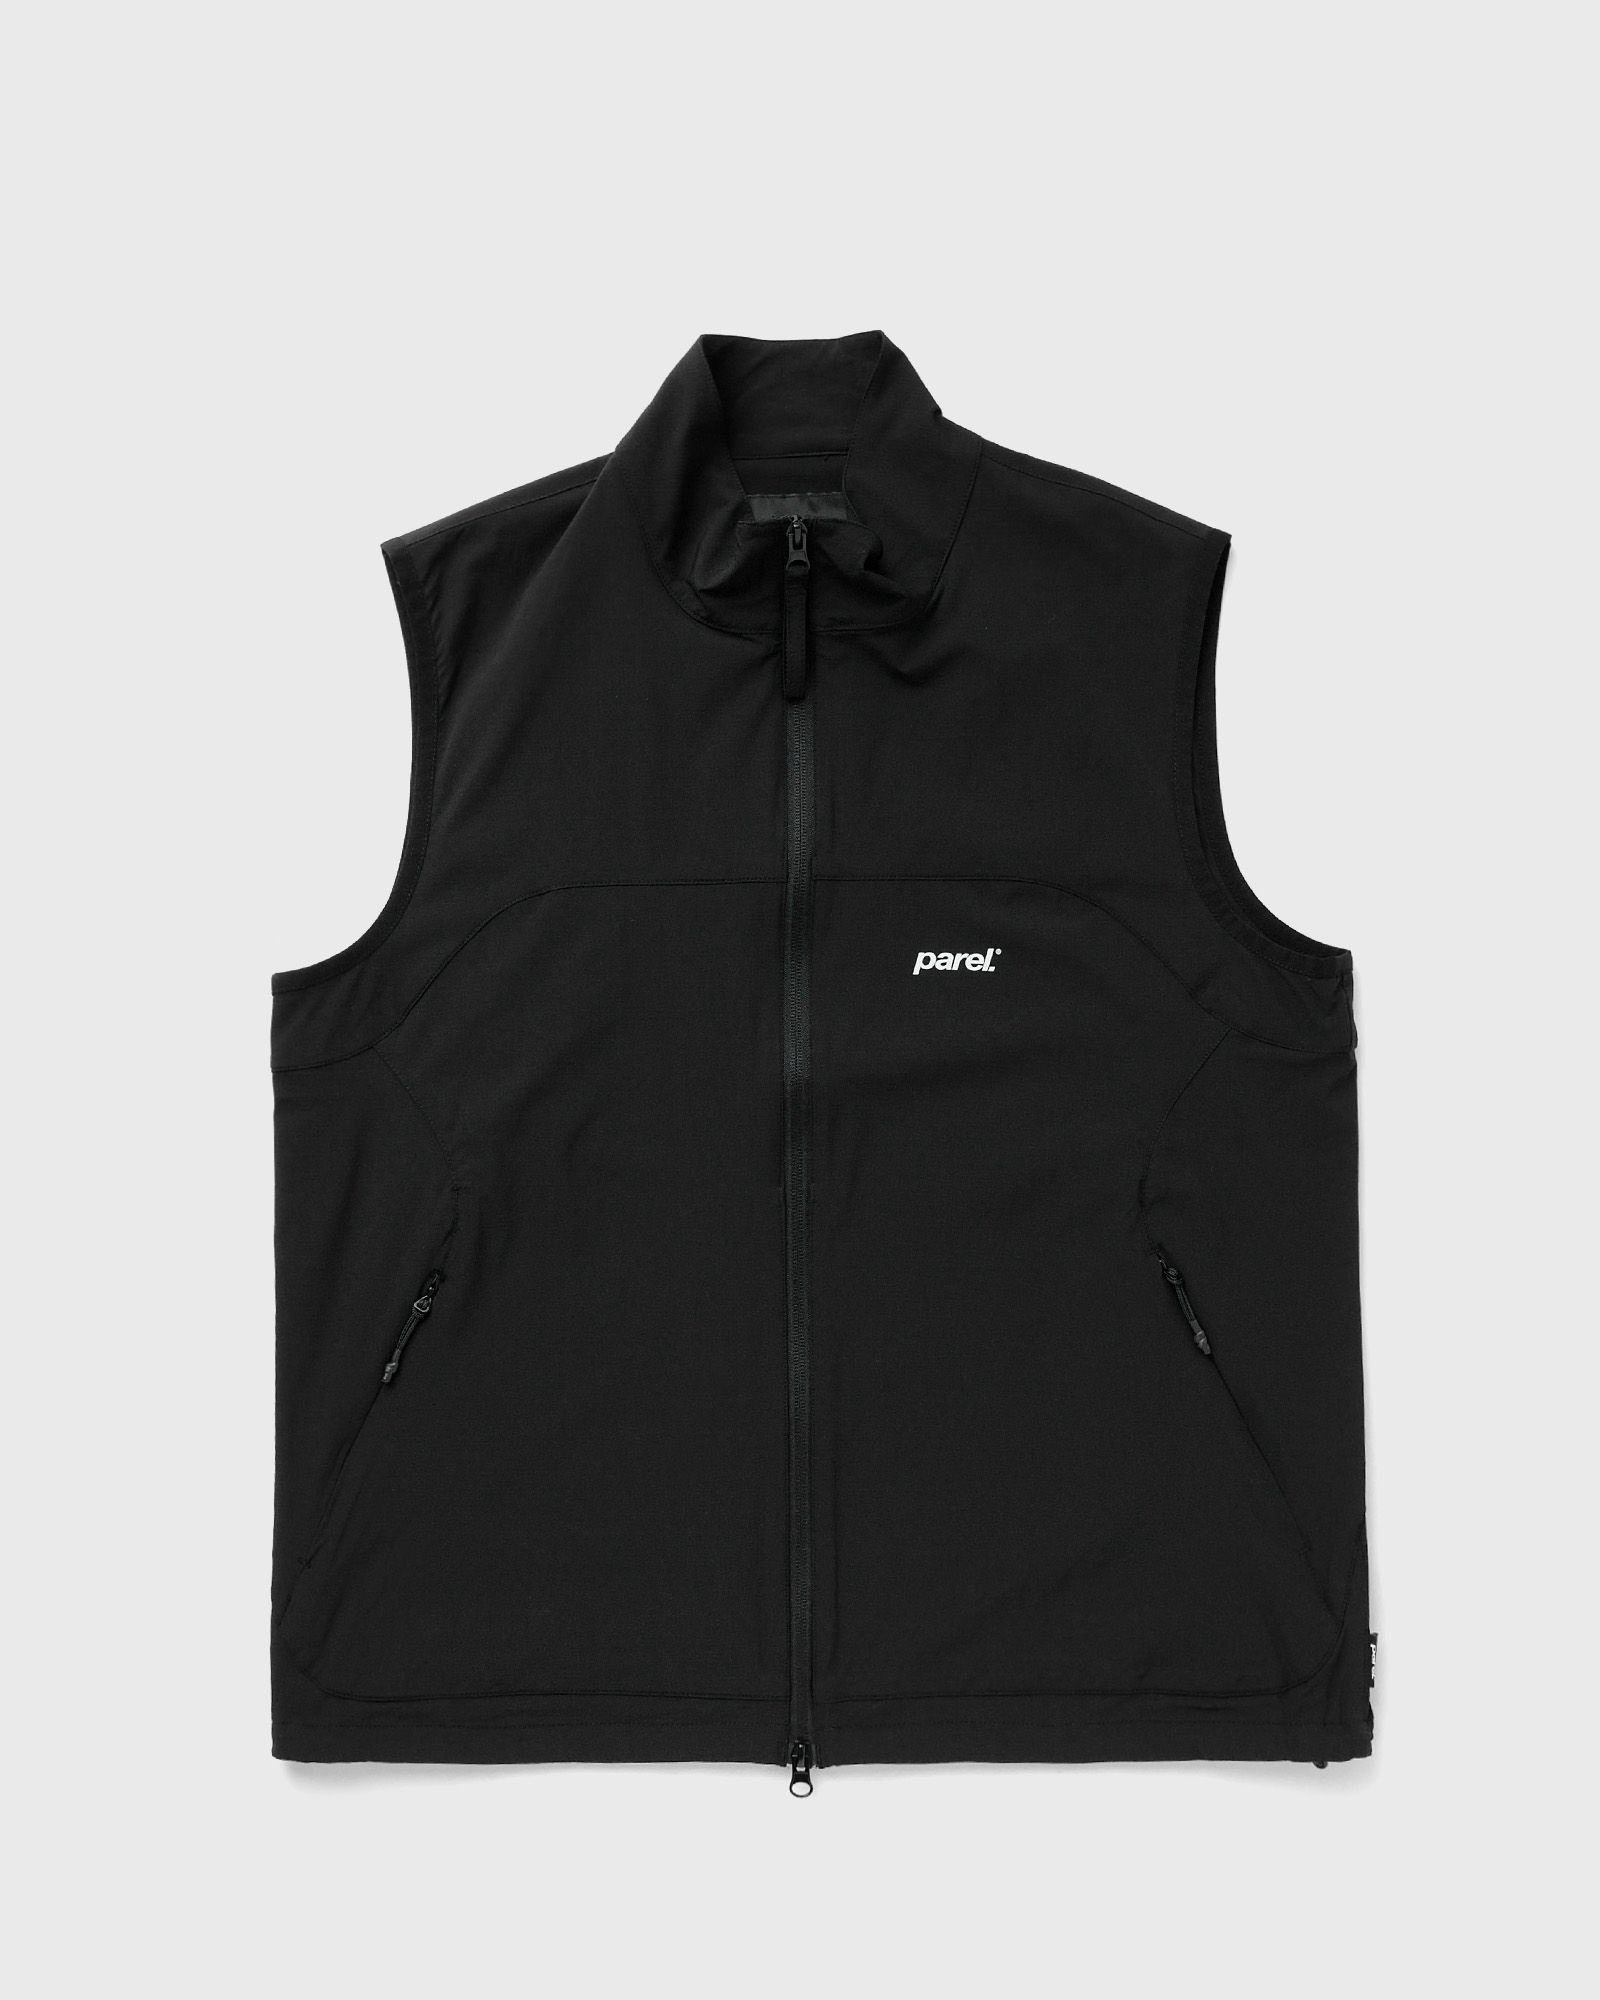 Parel studios - atlas vest men vests black in größe:xl